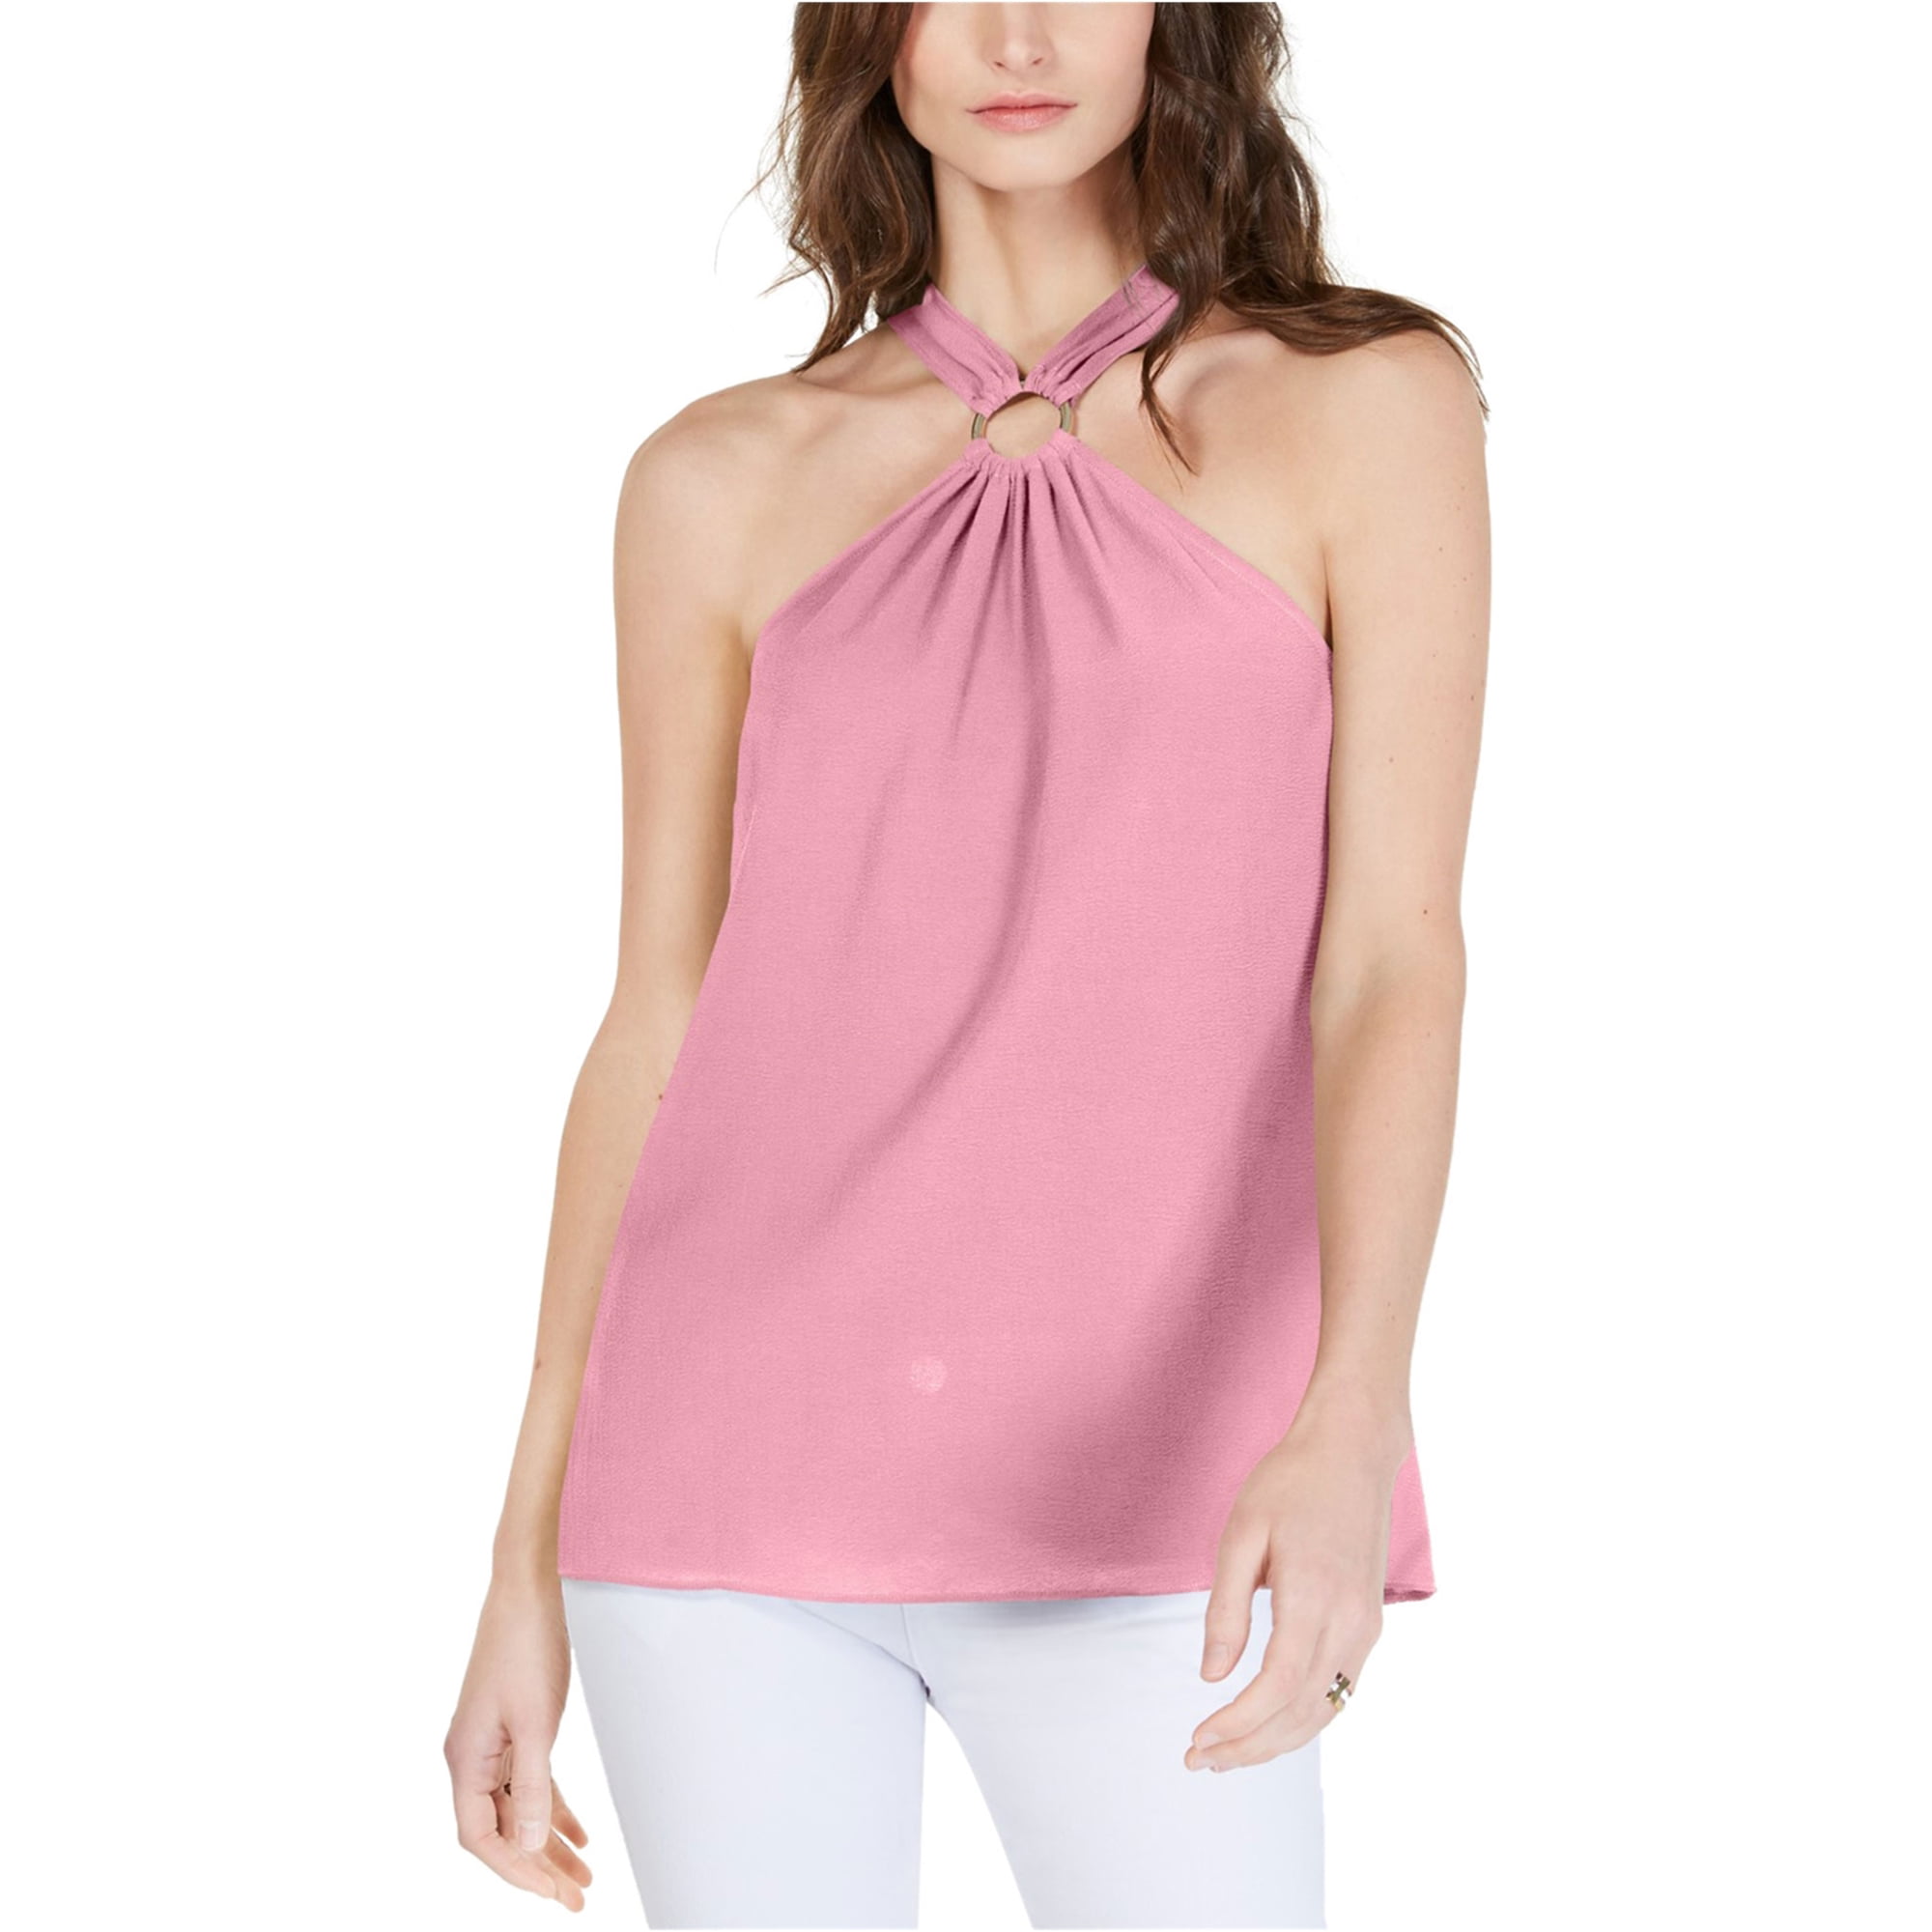 Michael Kors Womens Embellished Halter Top Shirt, Pink, Small 